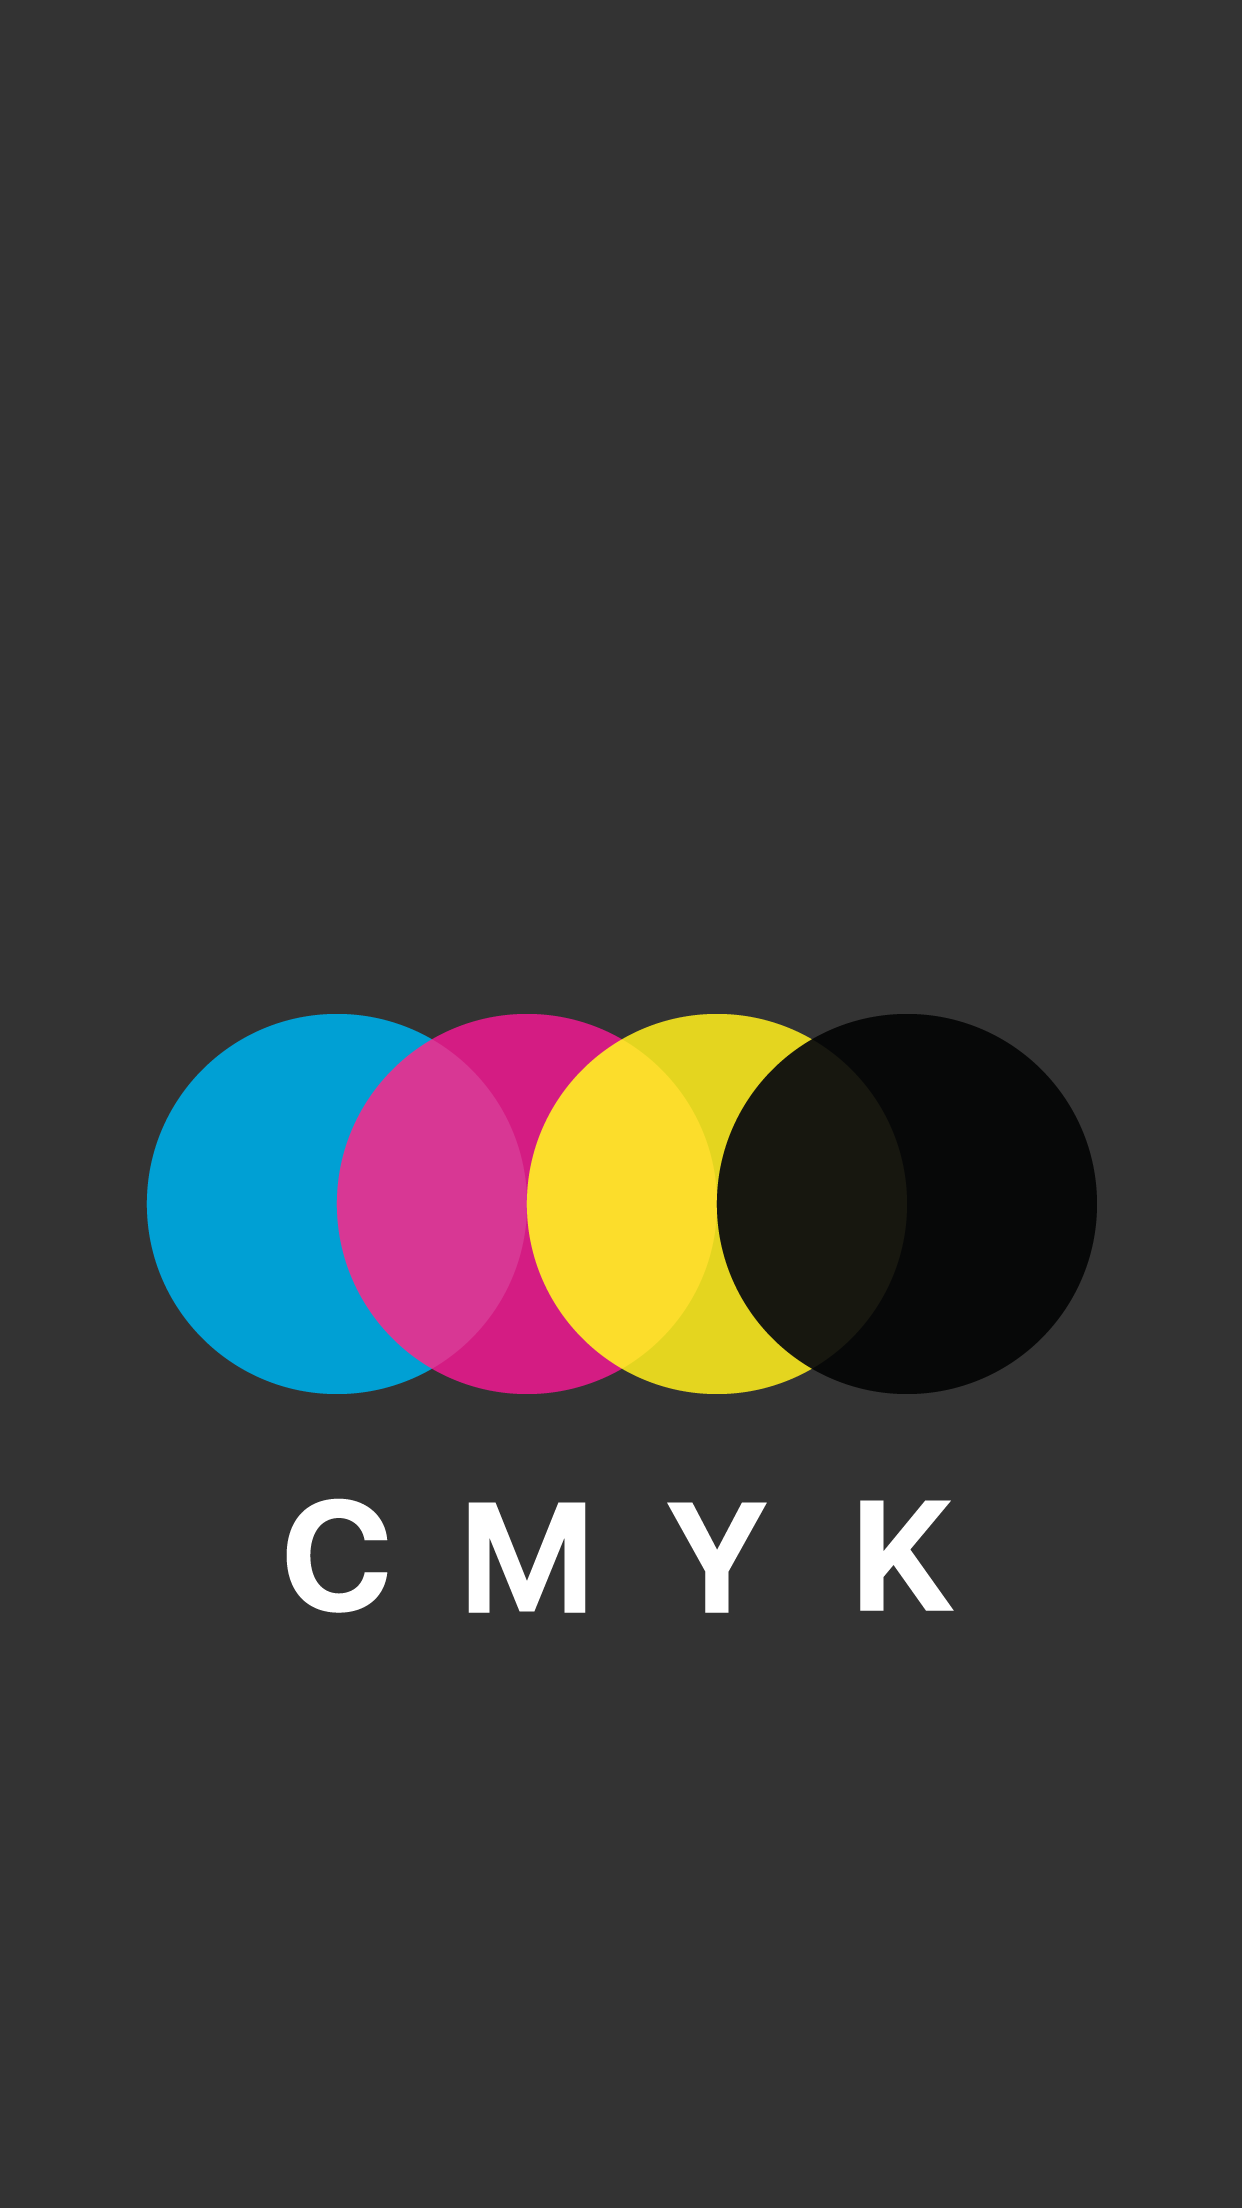 cmyk wallpaper desktop